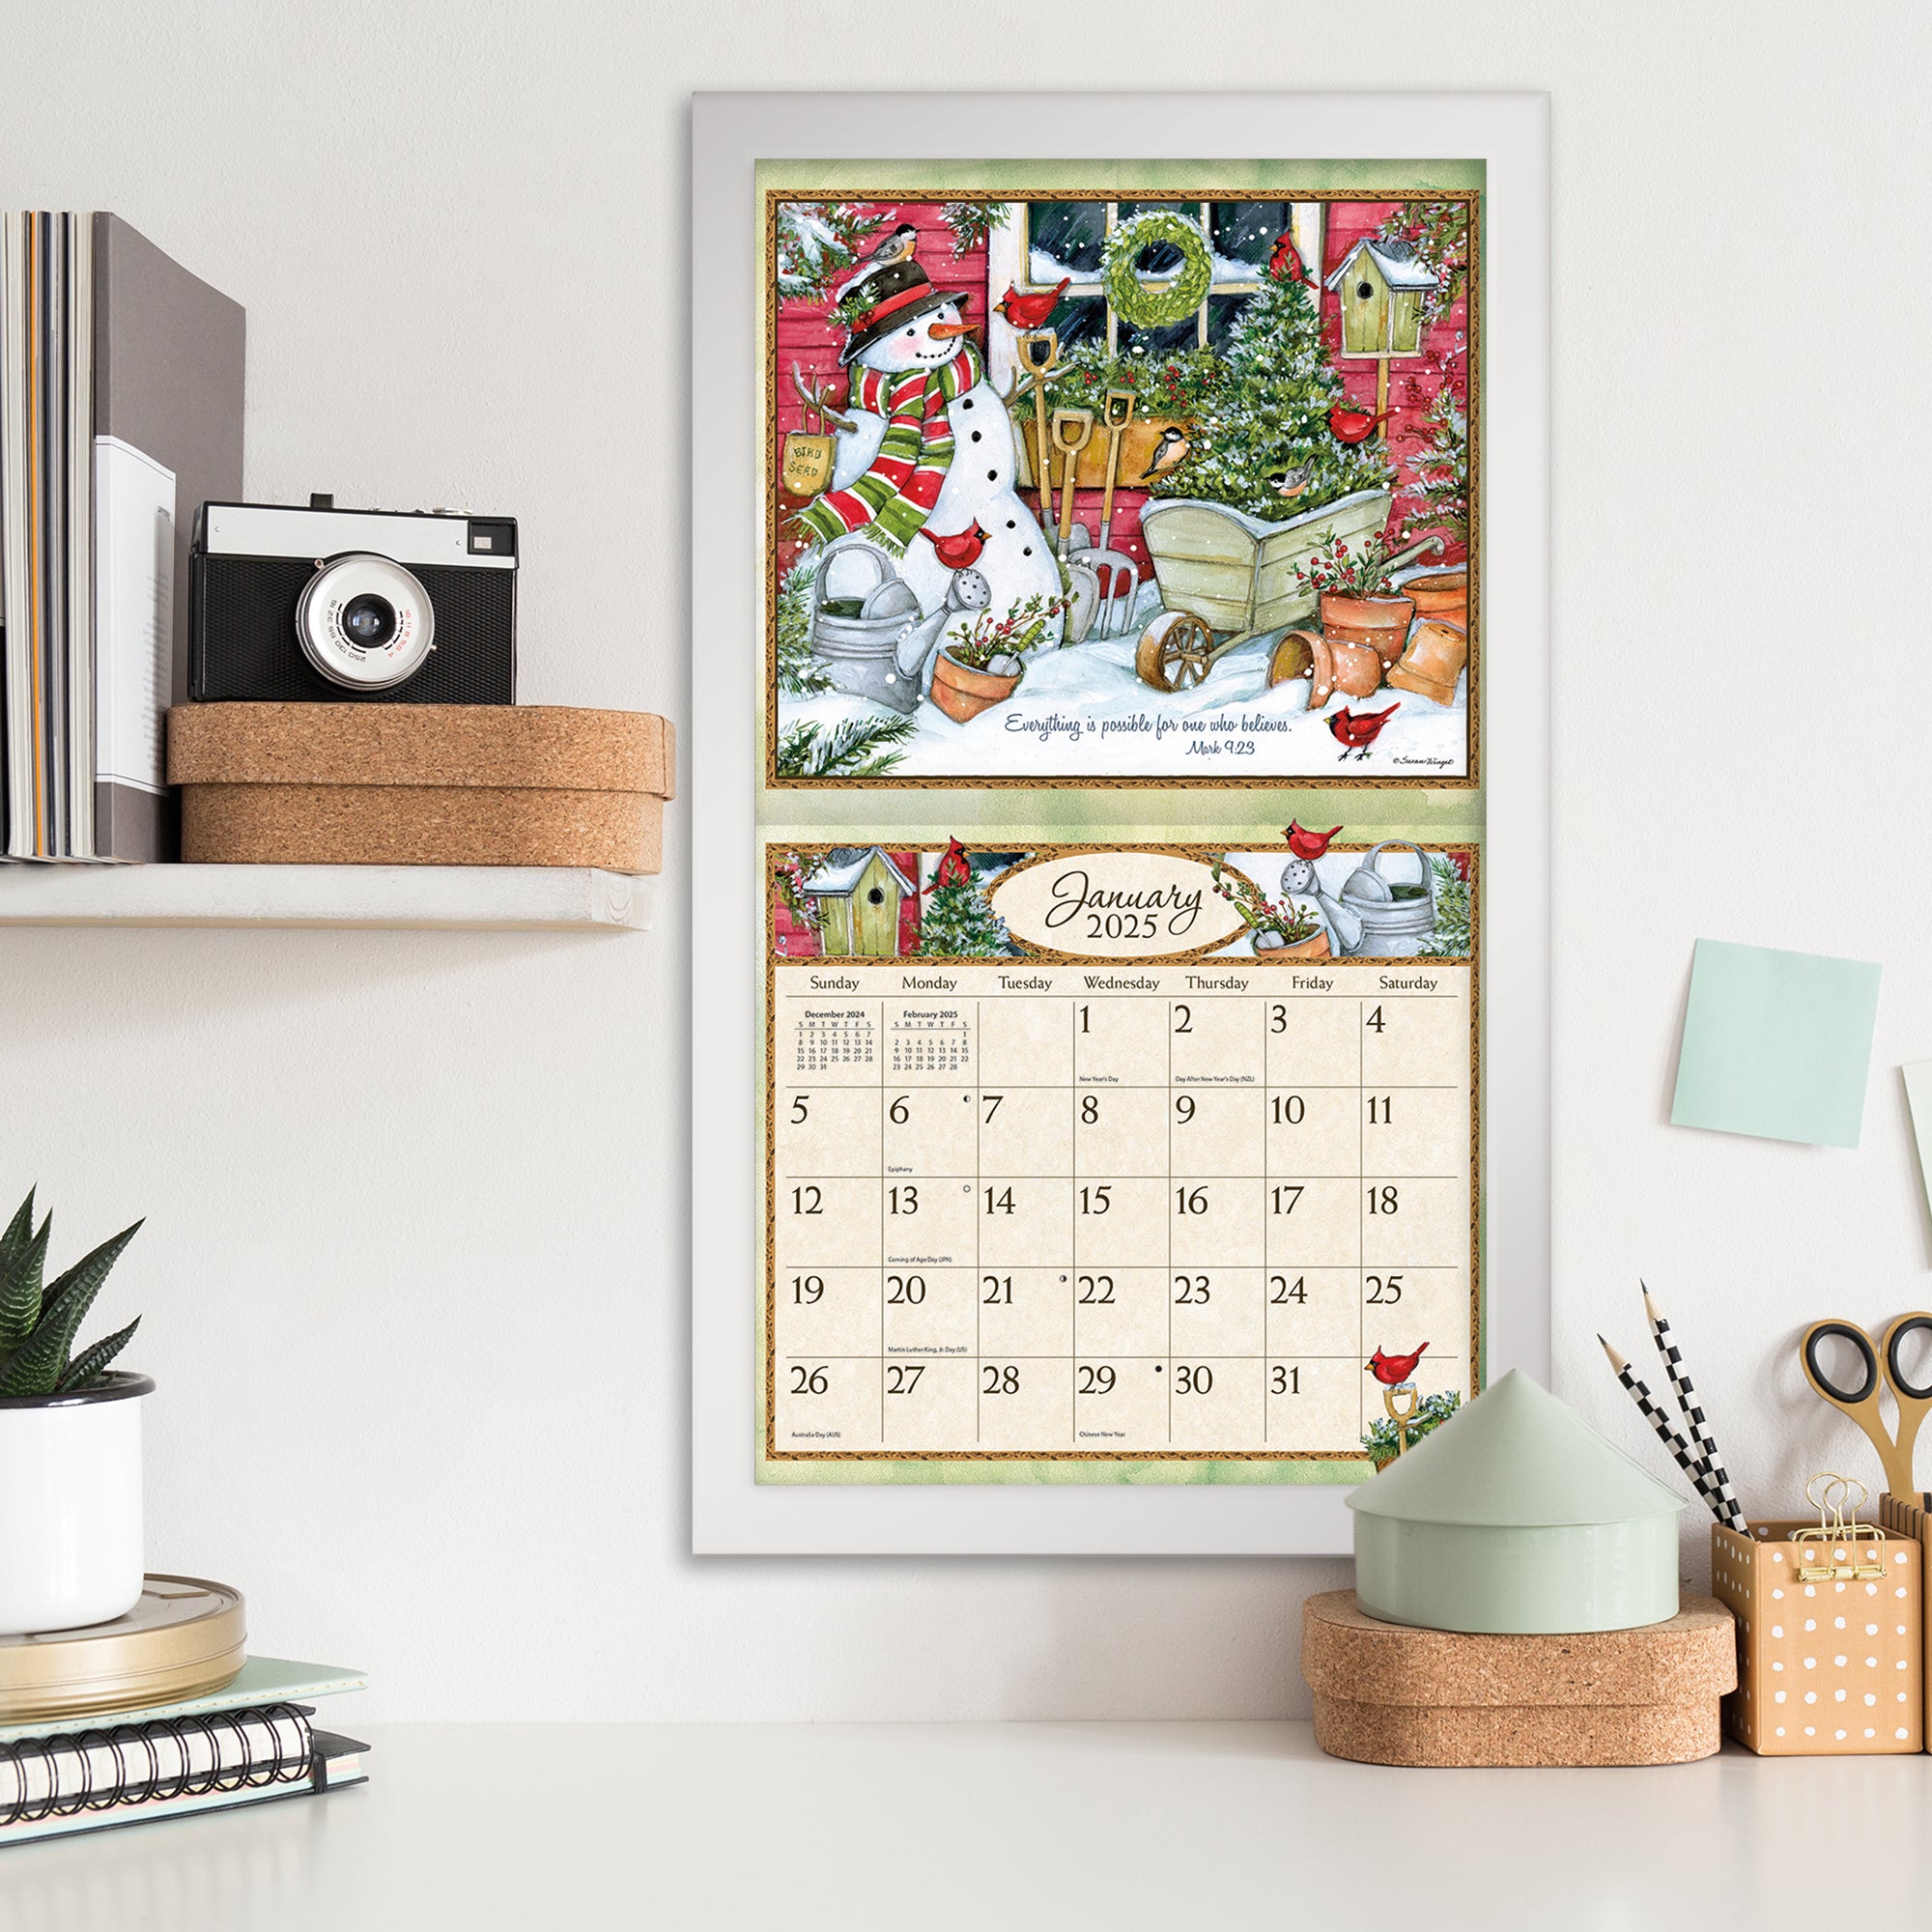 2025 LANG Bountiful Blessings By Susan Winget  - Deluxe Wall Calendar